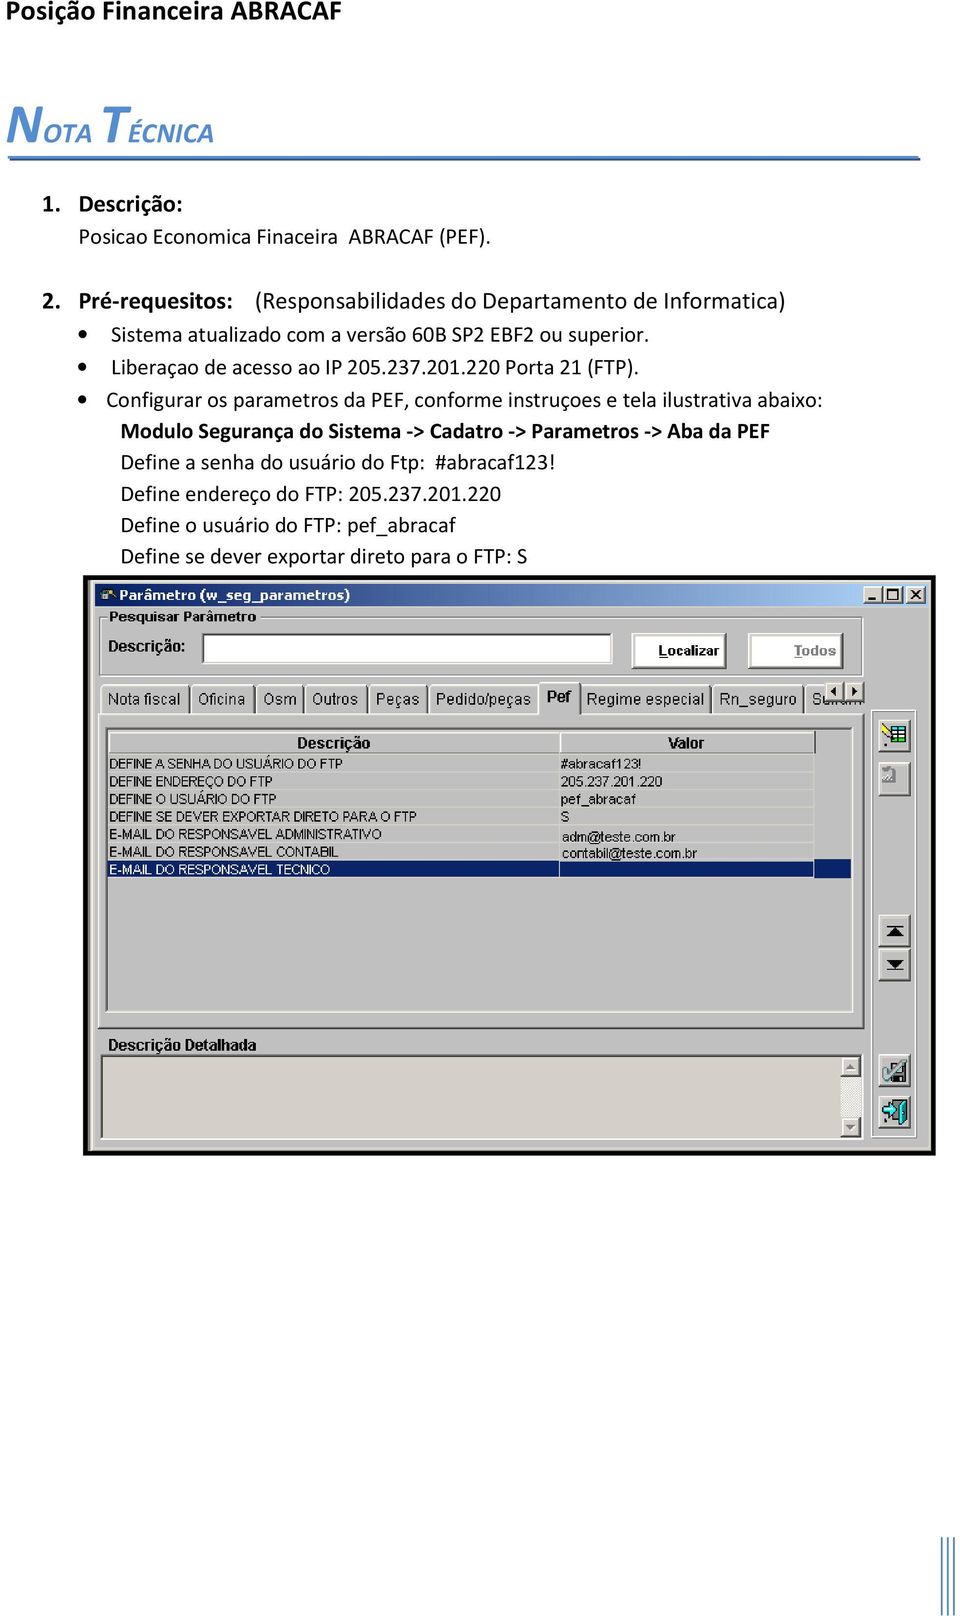 Liberaçao de acesso ao IP 205.237.201.220 Porta 21 (FTP).